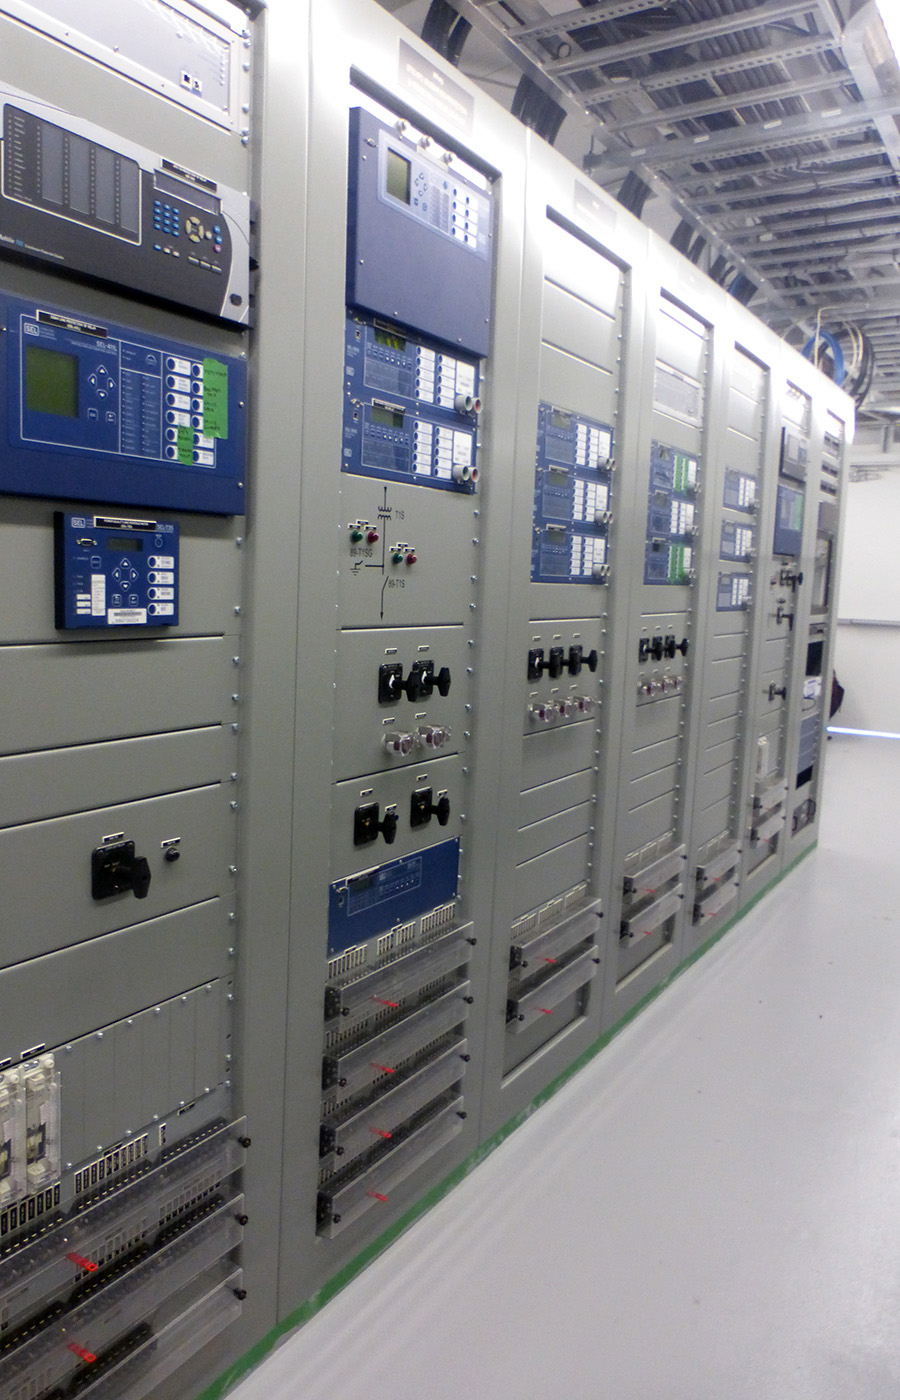 Control panels